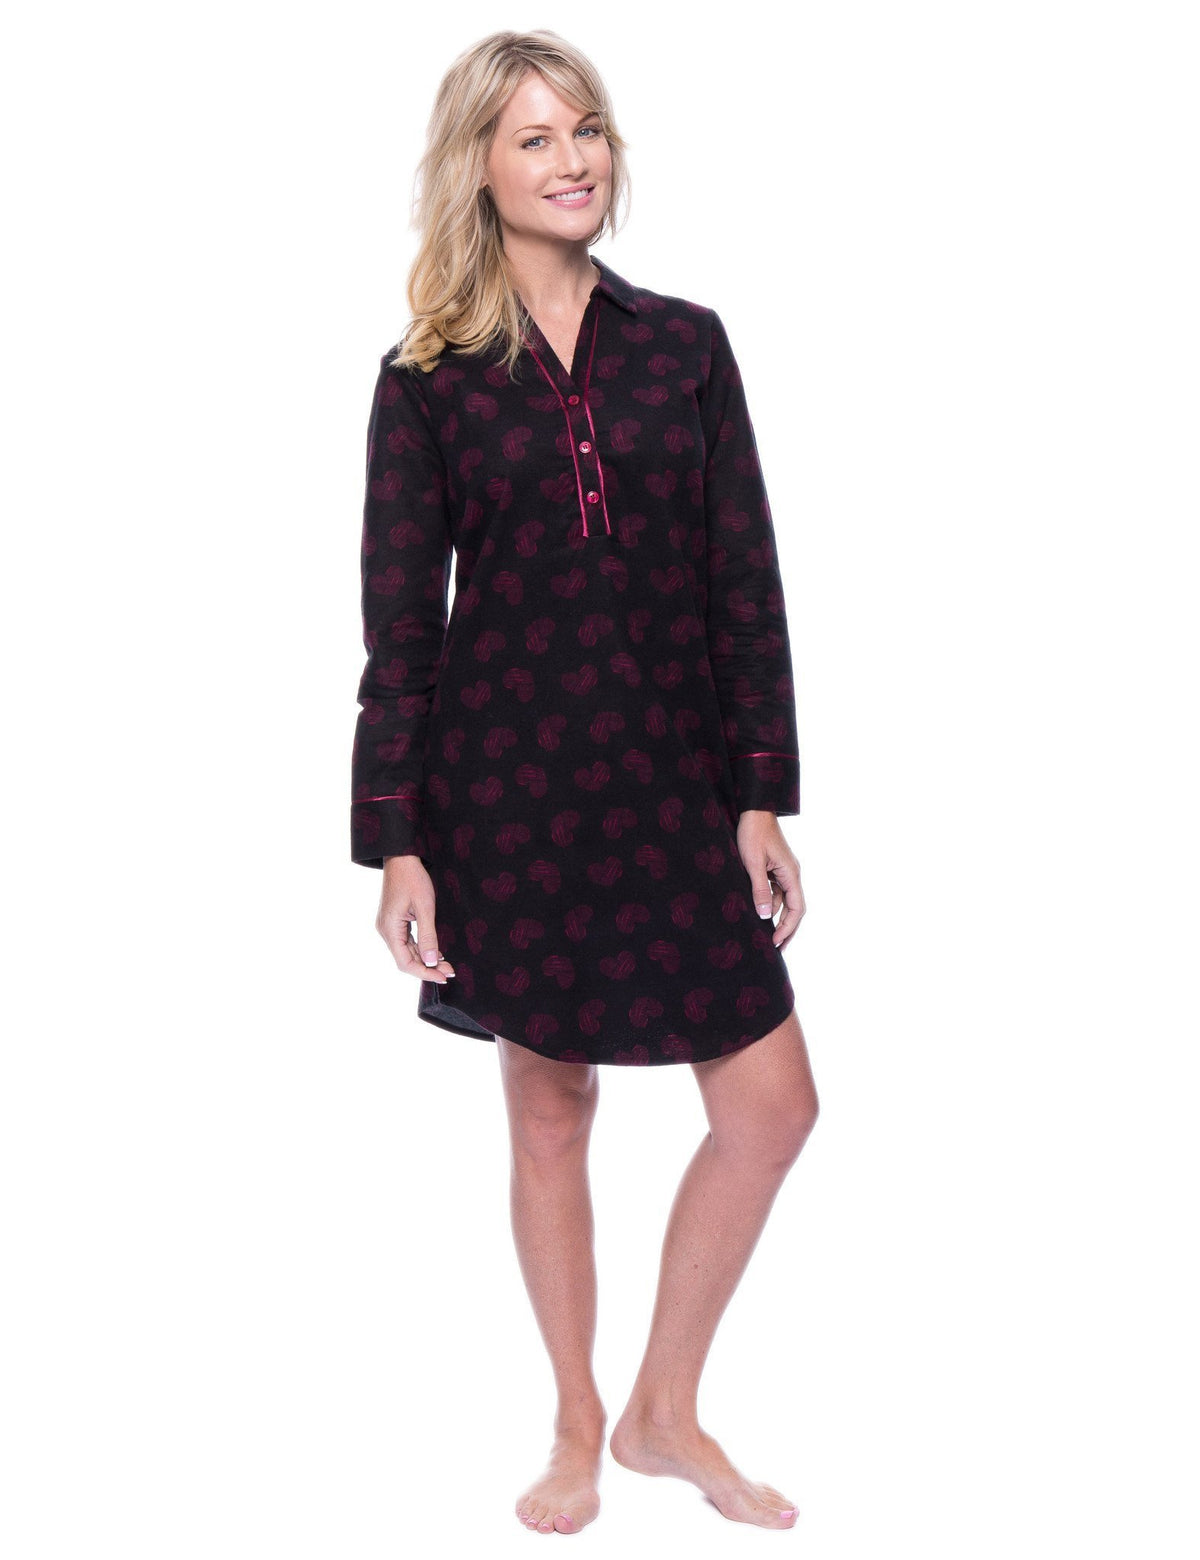 Womens Premium 100% Cotton Flannel Long Sleeve Sleep Shirt - Hearts Black/Red